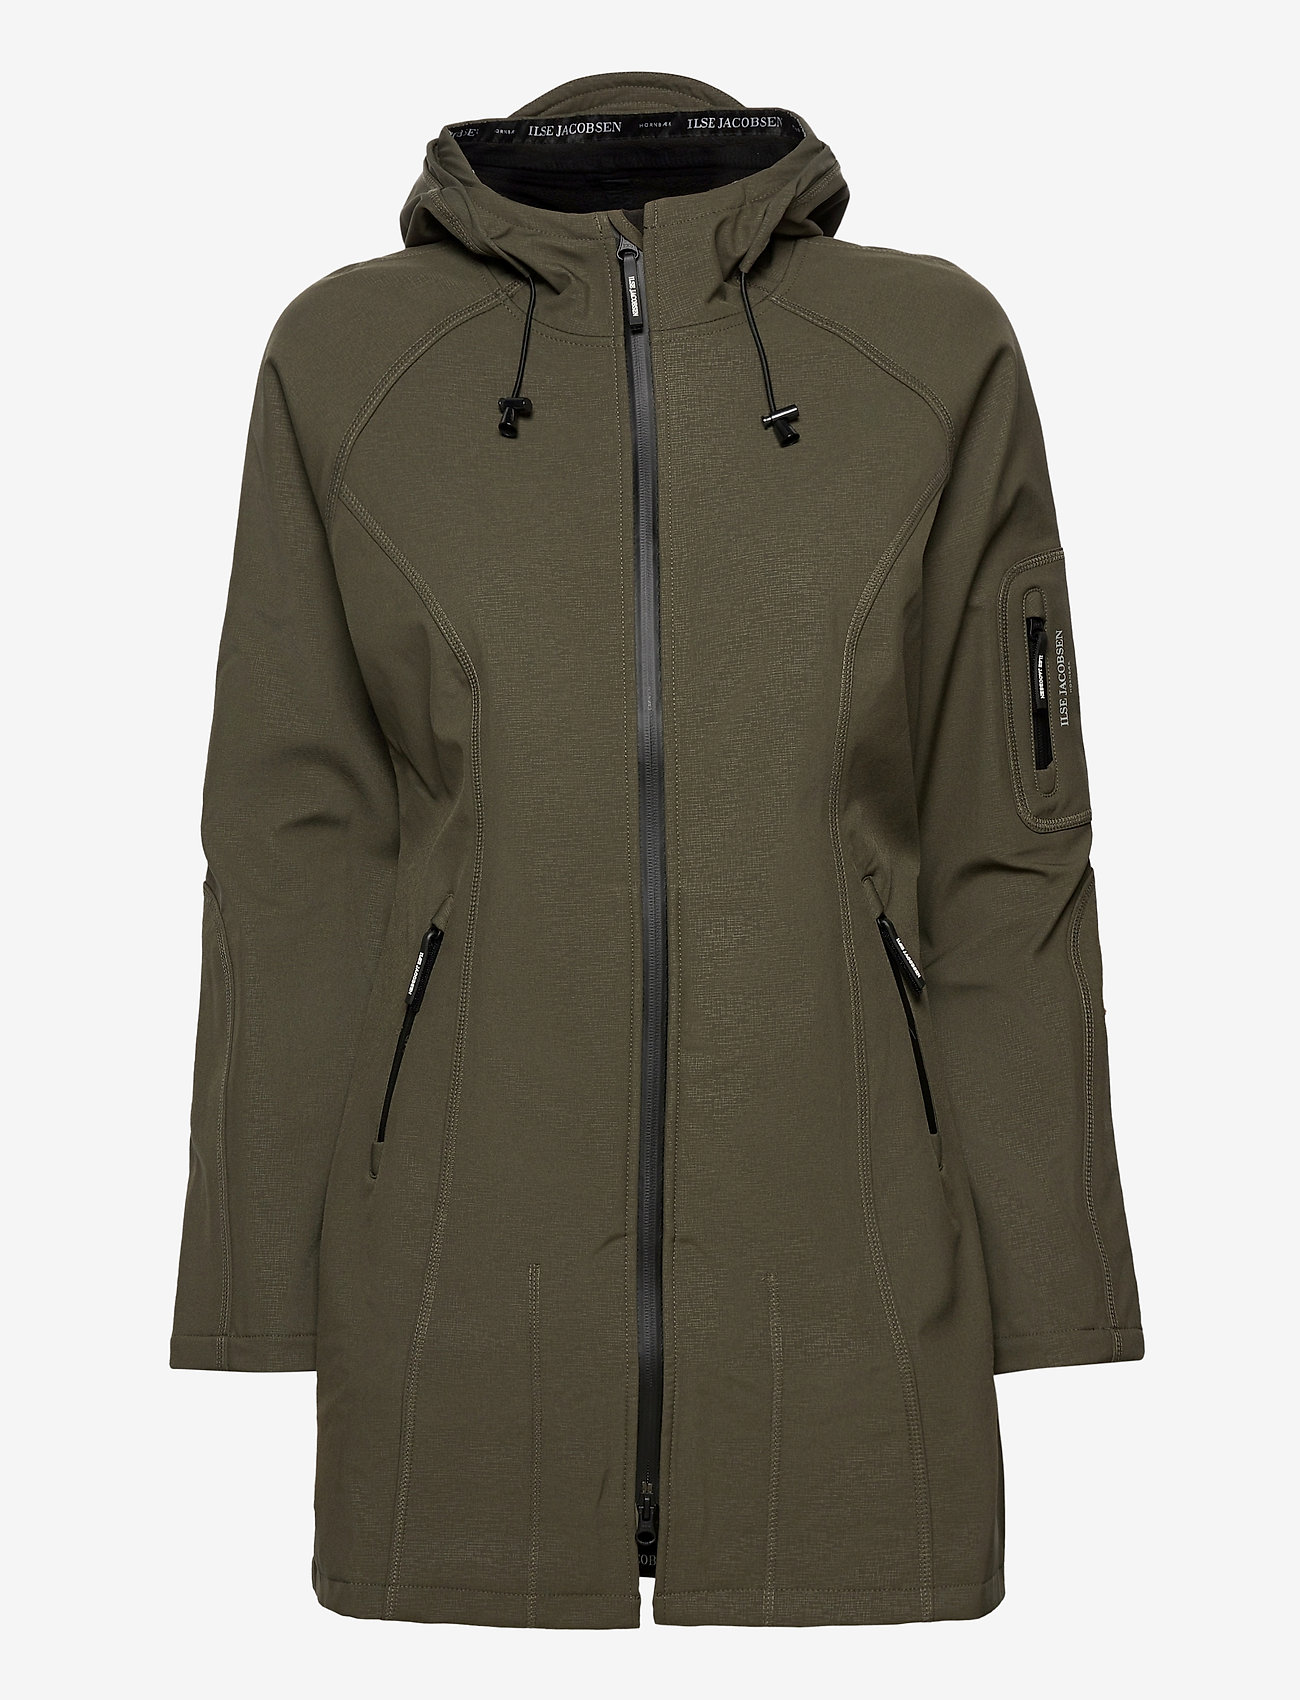 Ilse Jacobsen - Rain - rain coats - army - 1